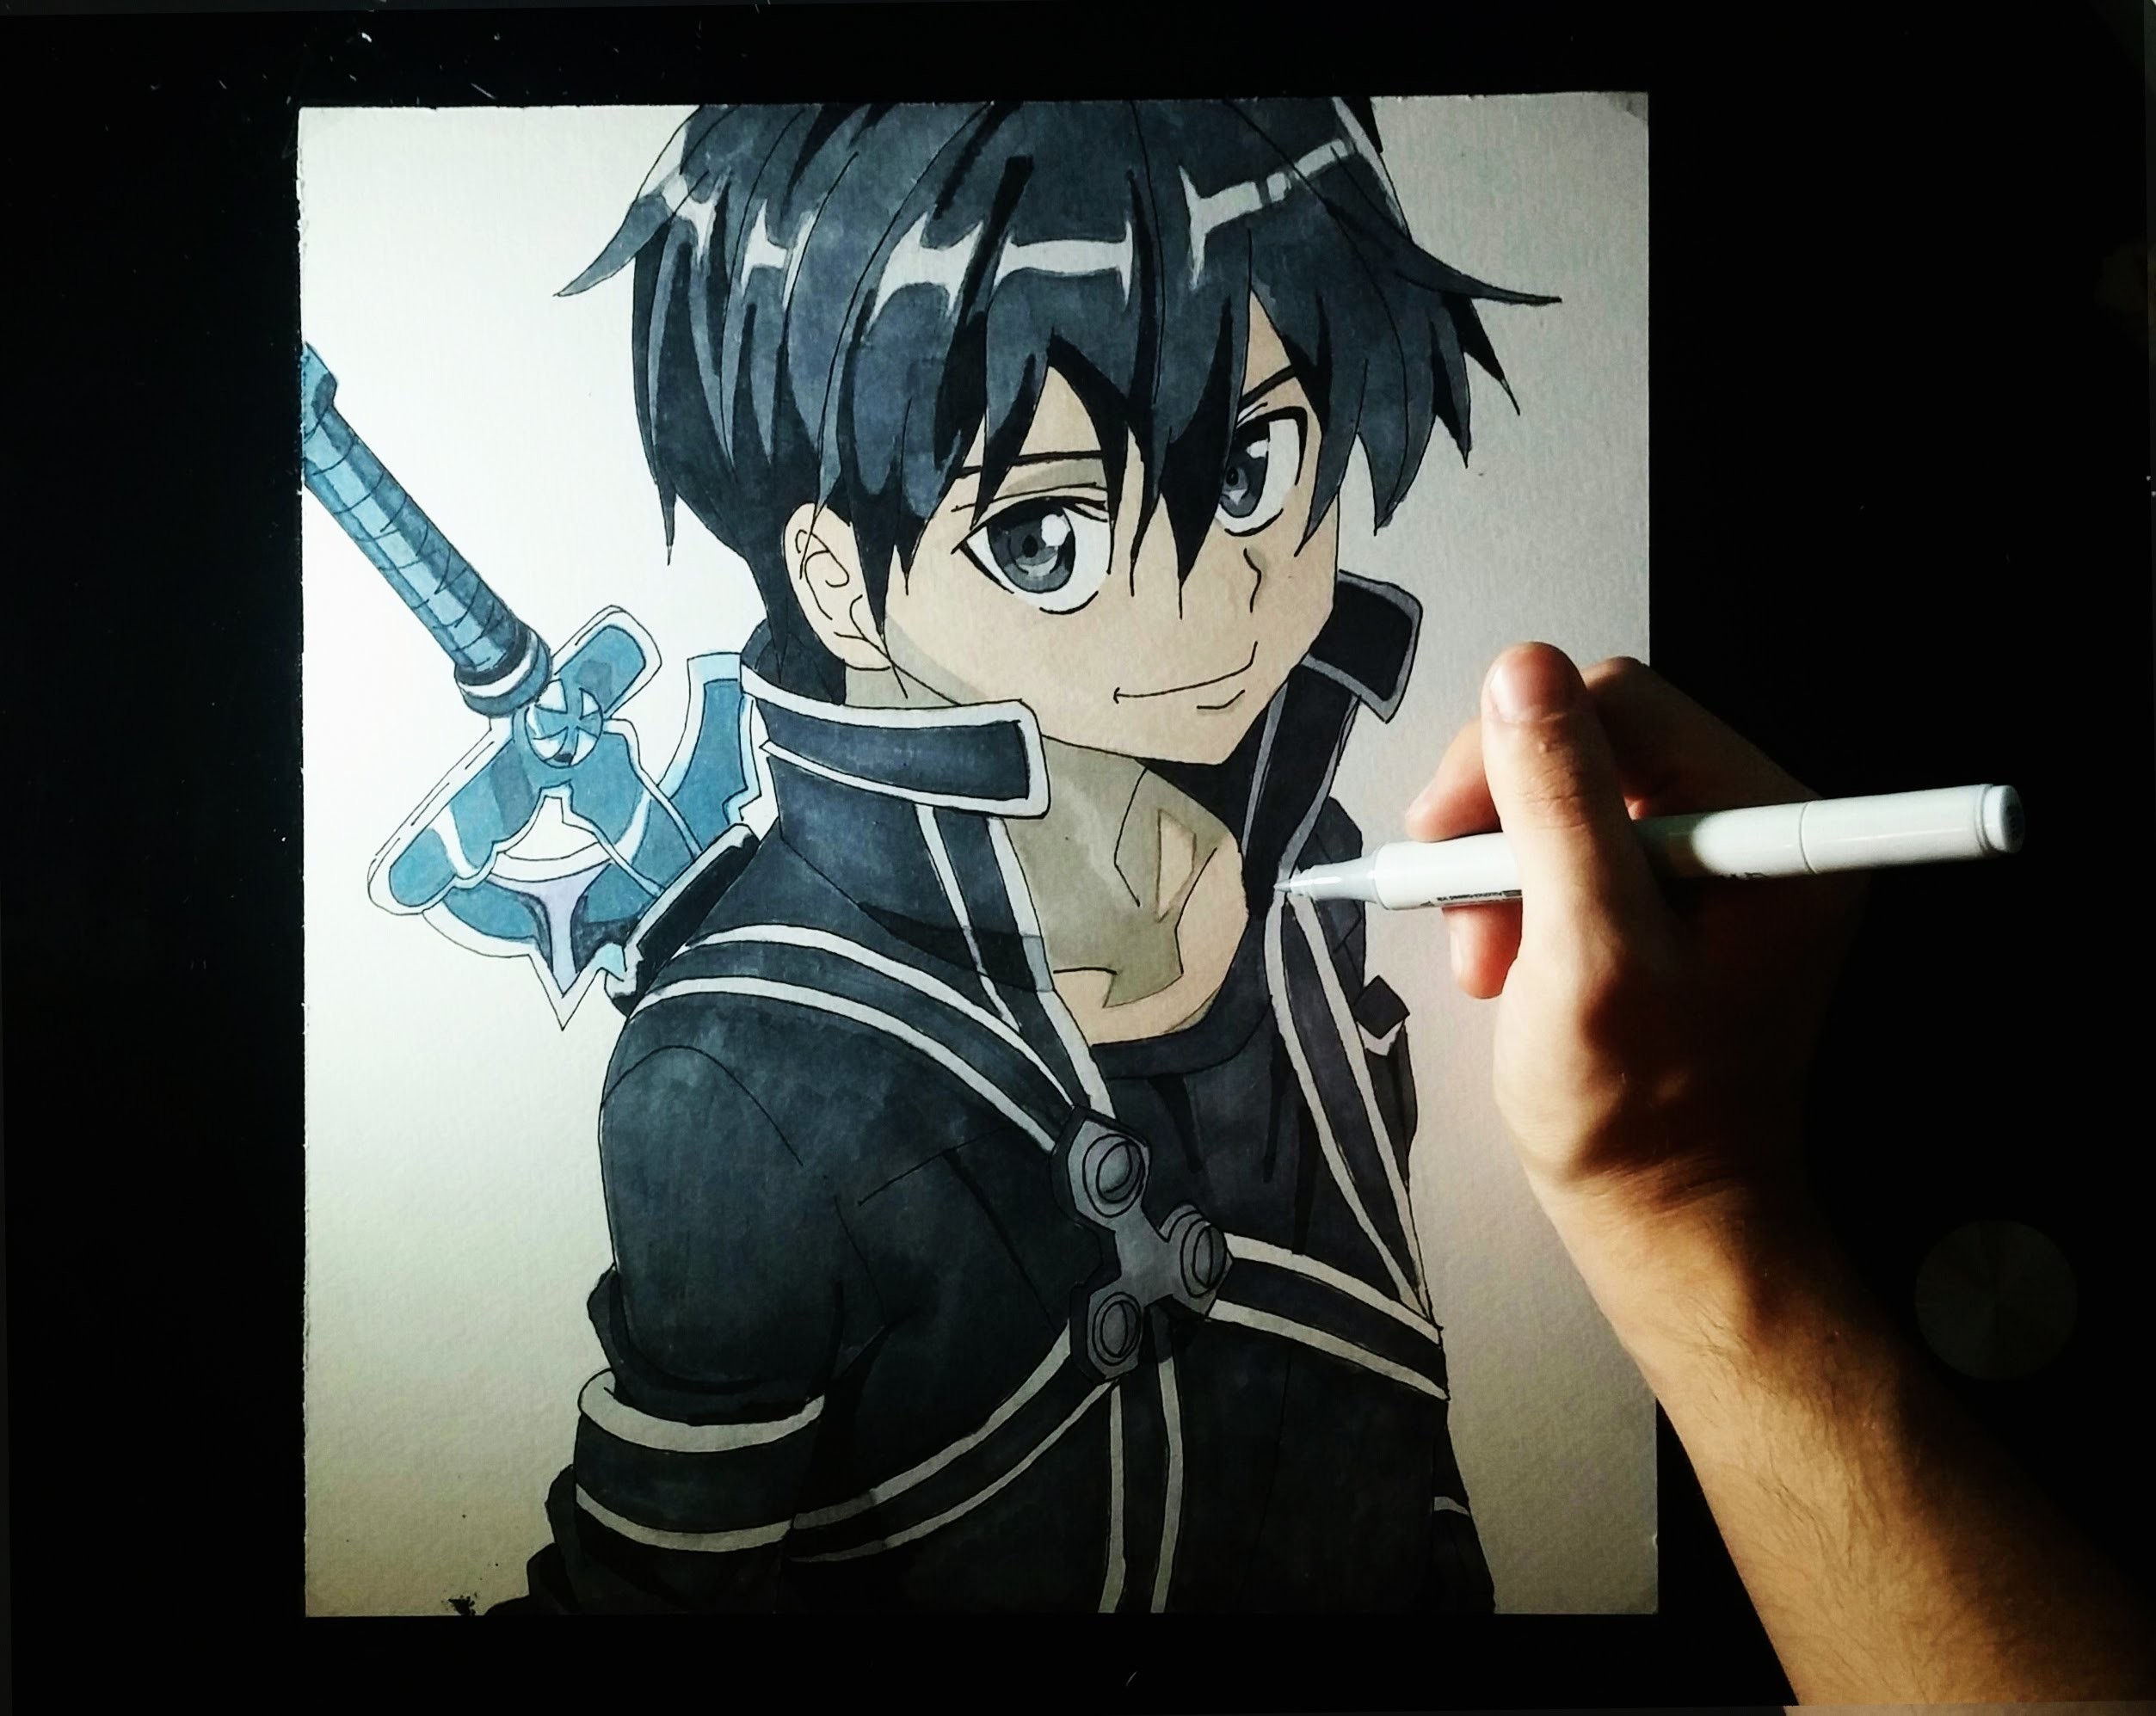 Cómo dibujar a Kirito (Sword Art Online) paso a paso | How to draw Kirito